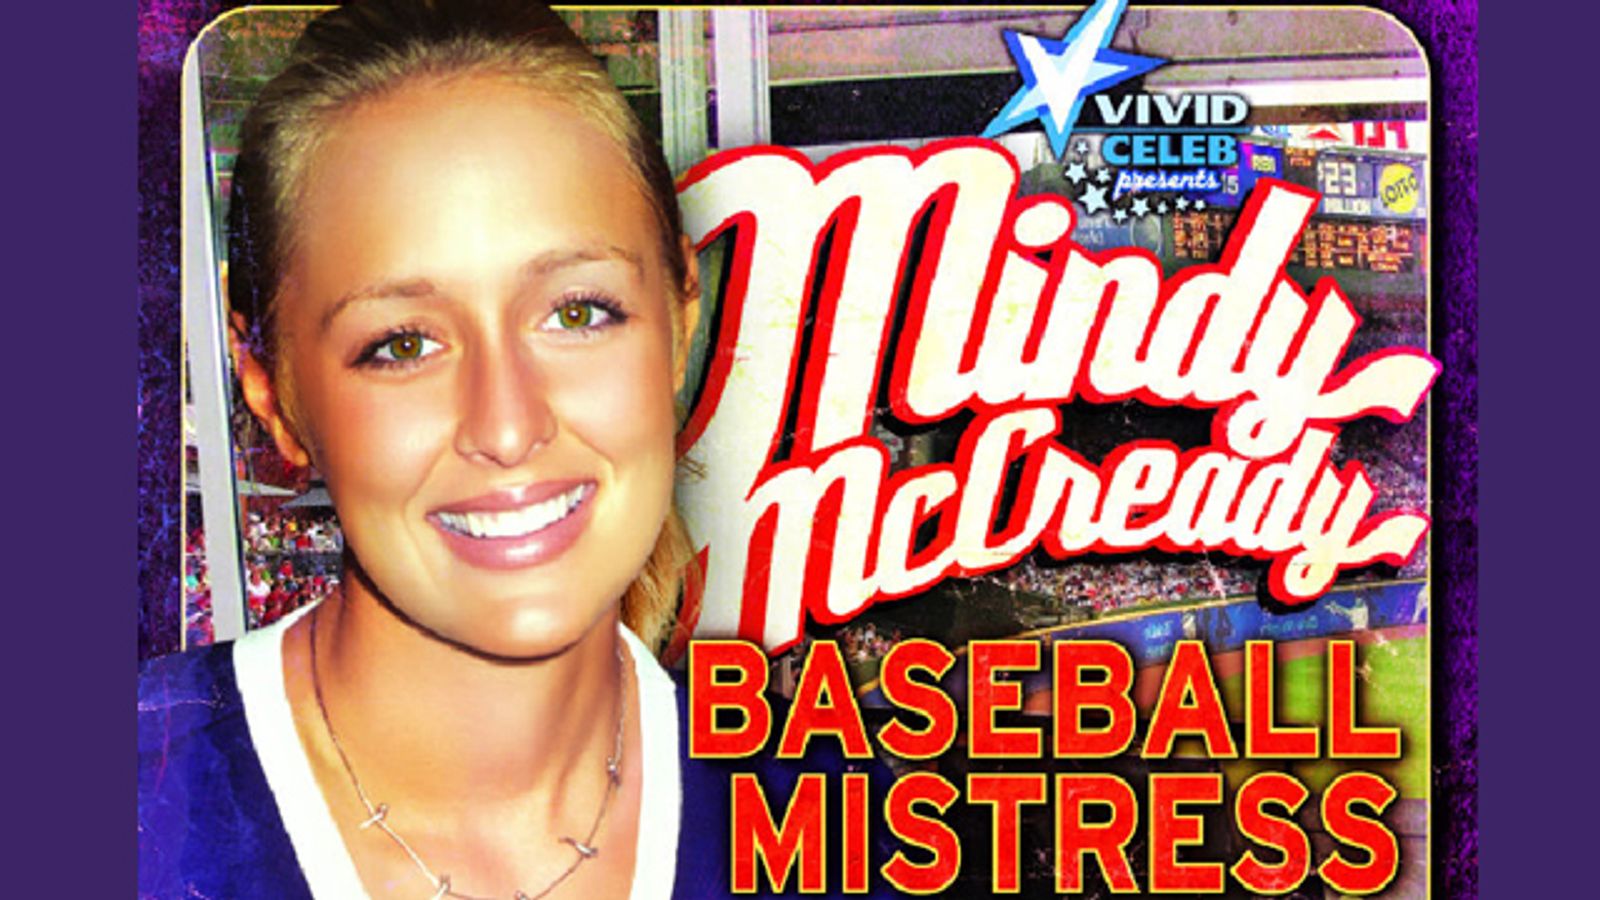 Vivid Halts Distro of Mindy McCready Sex Tape